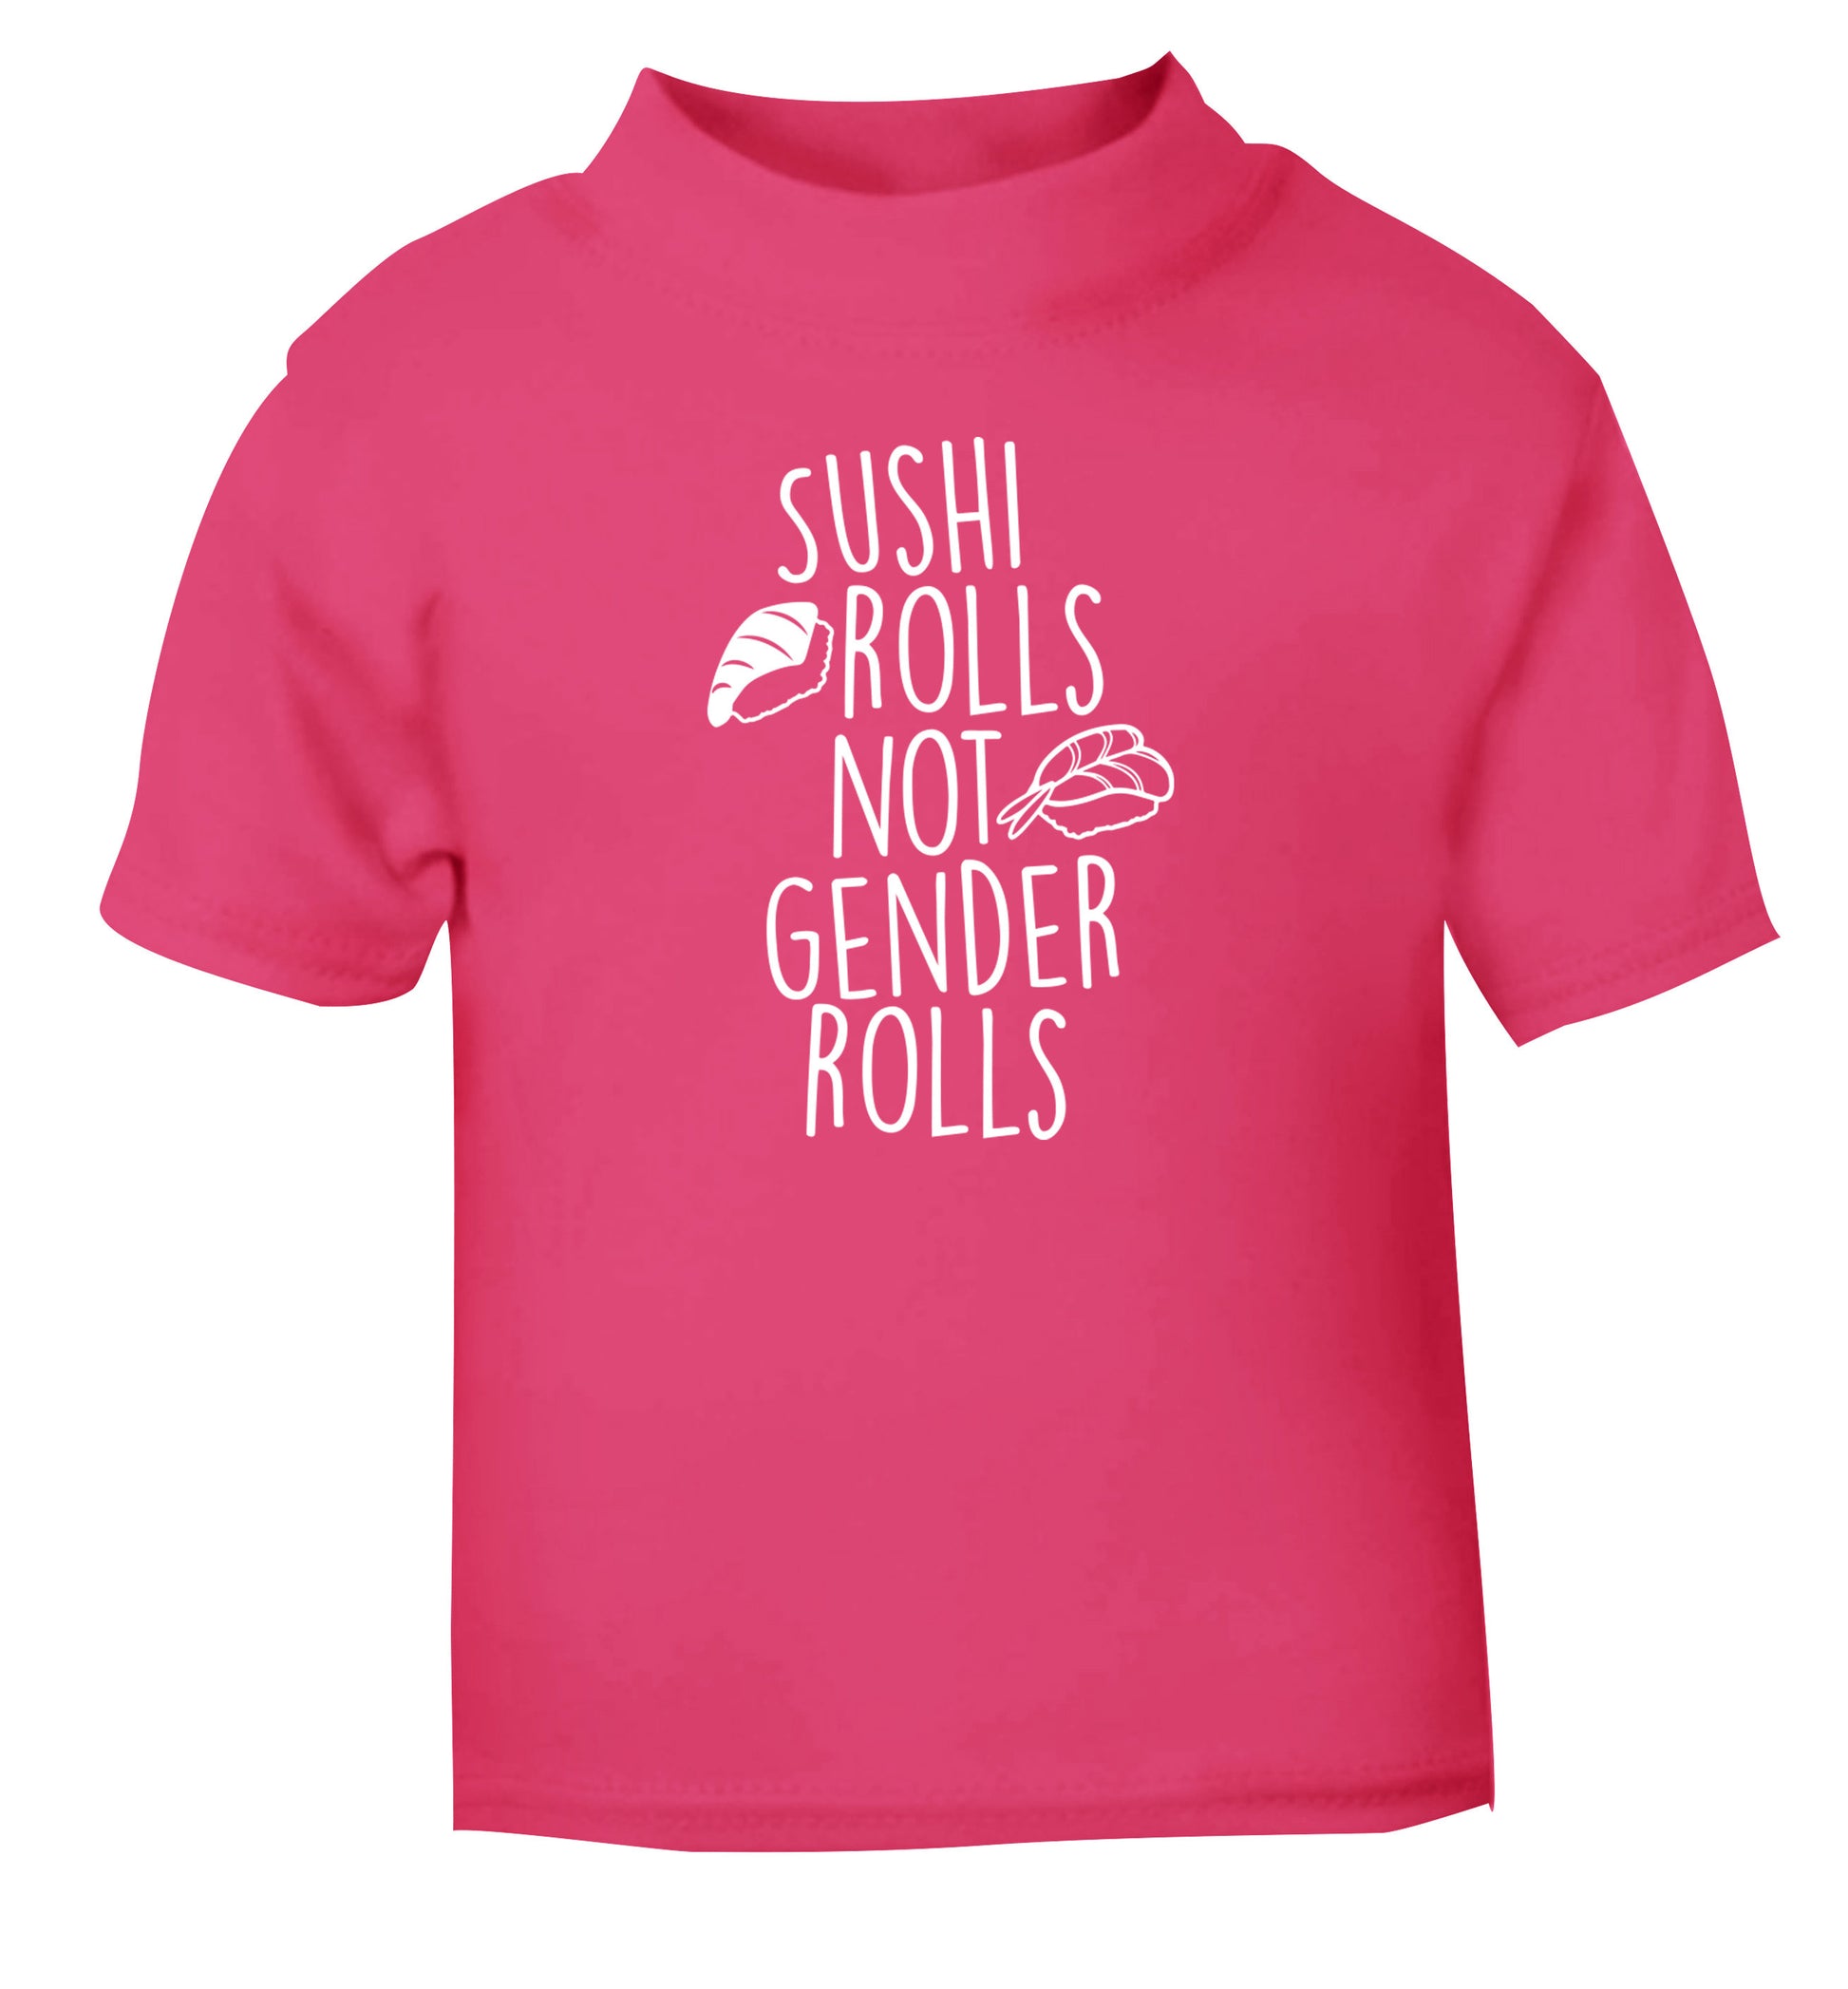 Sushi rolls not gender rolls pink Baby Toddler Tshirt 2 Years